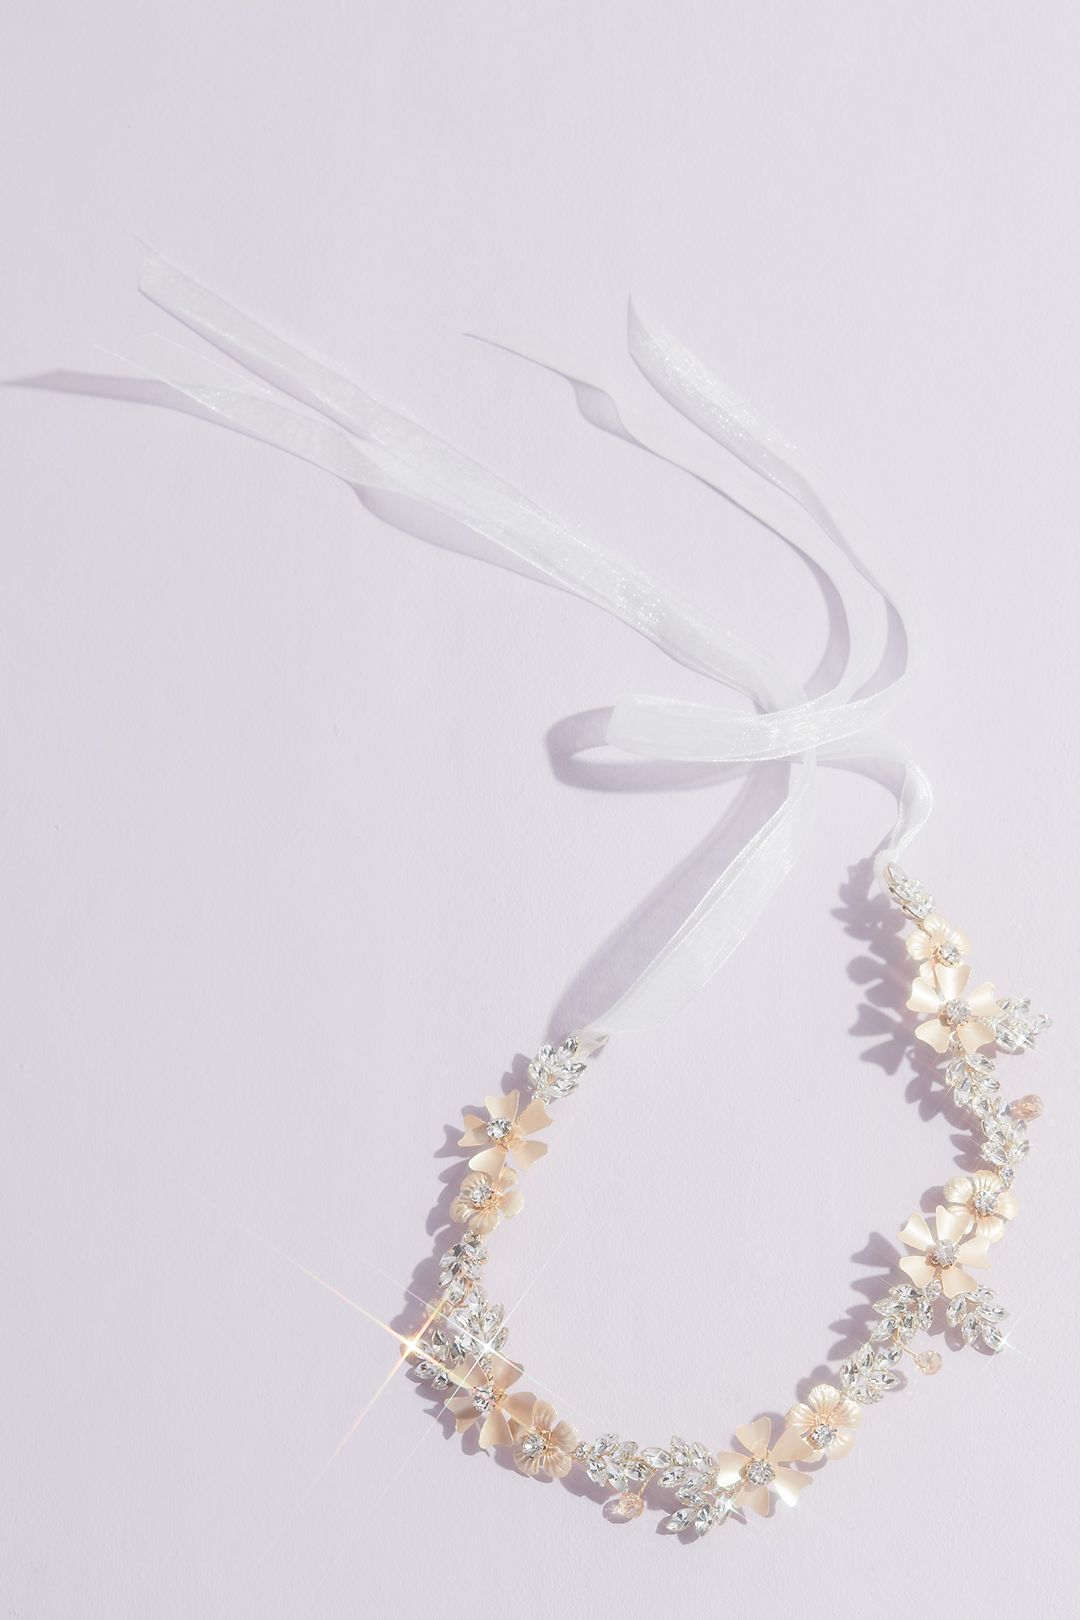 Painted Floral and Crystal Tieback Headband Image 4